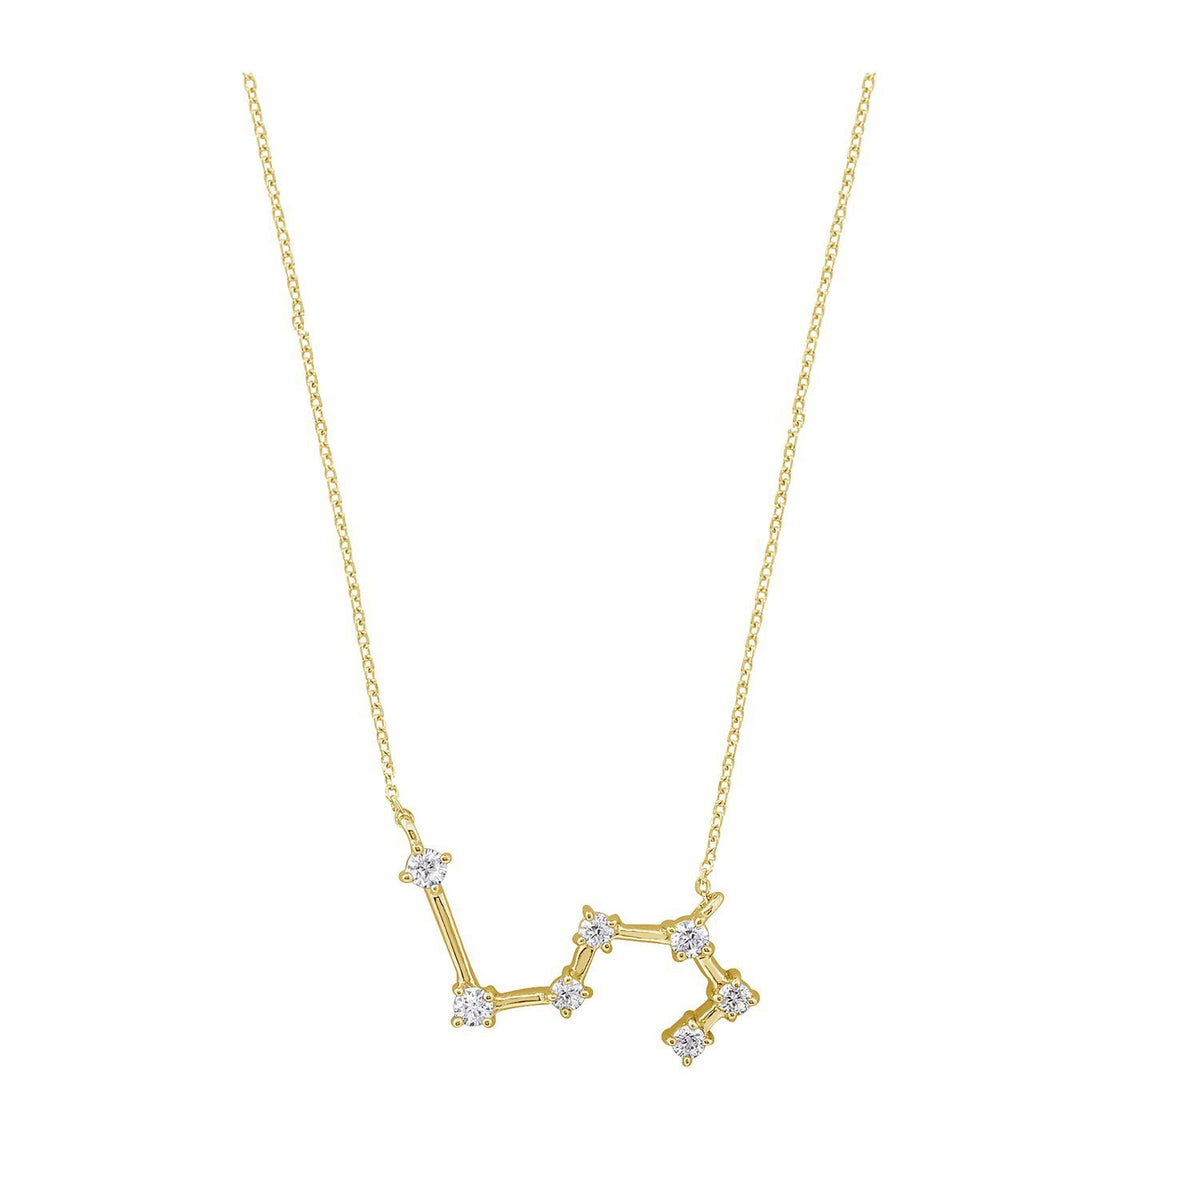 J'ADMIRE Horoscope Collection - Cubic Zirconia Pendant Necklace